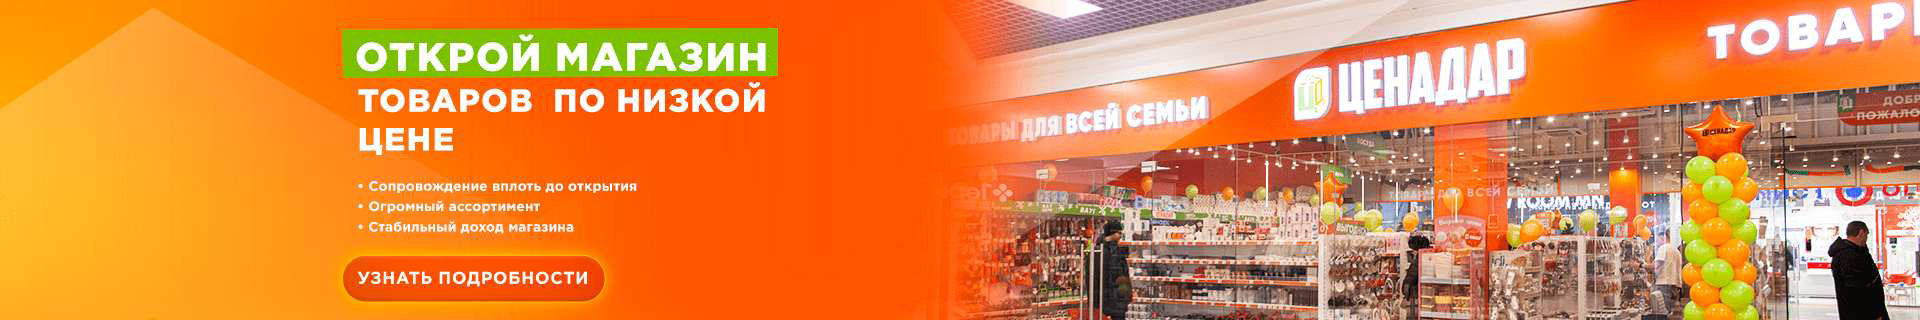 Франшиза магазинов низких цен «ЦЕНАДАР»